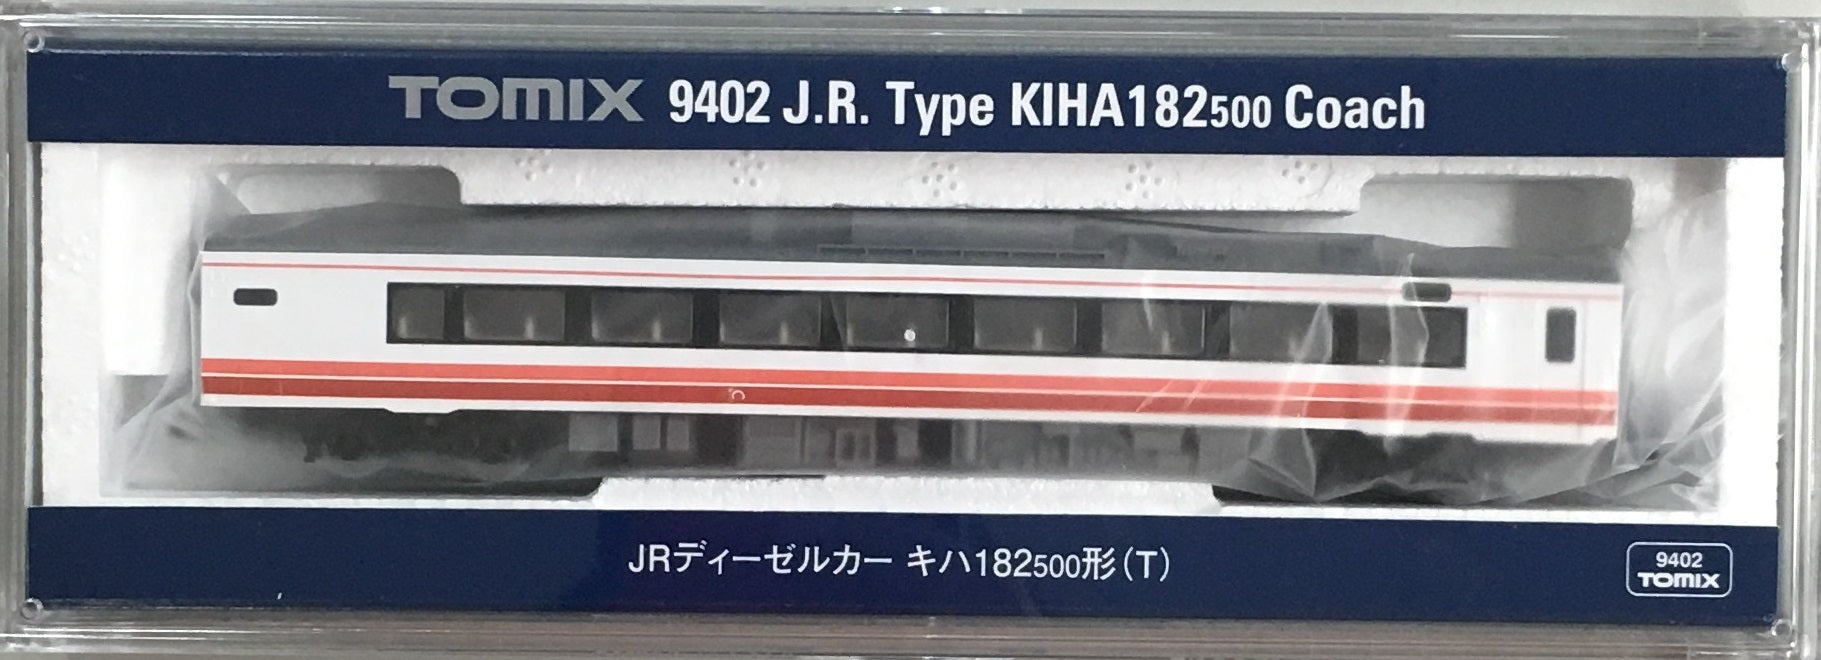 9402 J.R. Diesel Car Type KIHA182-500 Coach (T)